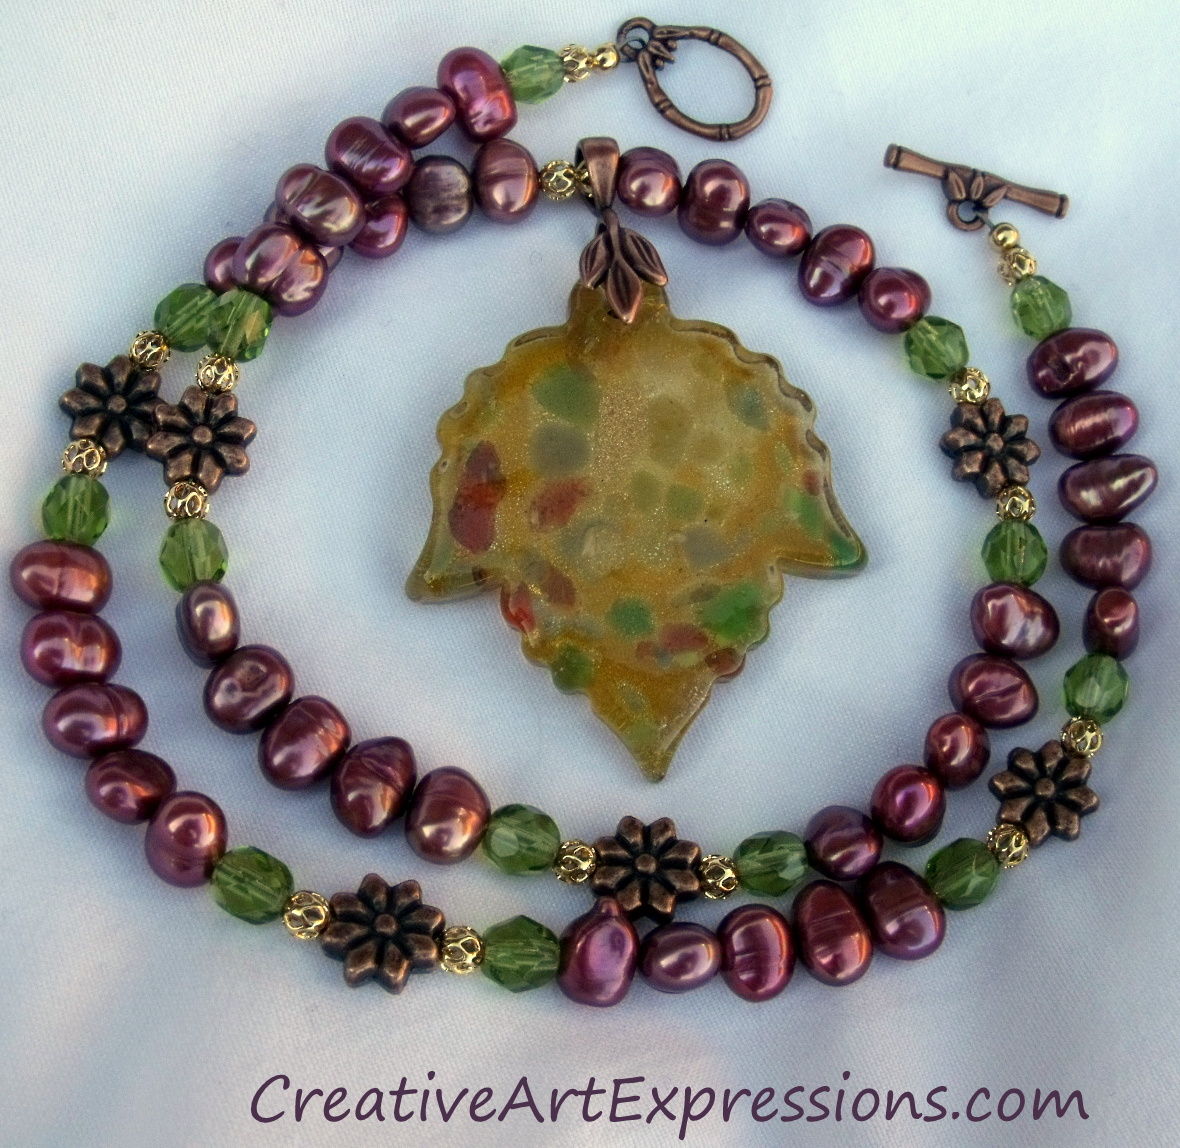 Creative Art Expressions Handmade Autumn Leaf Necklace Jewelry Design